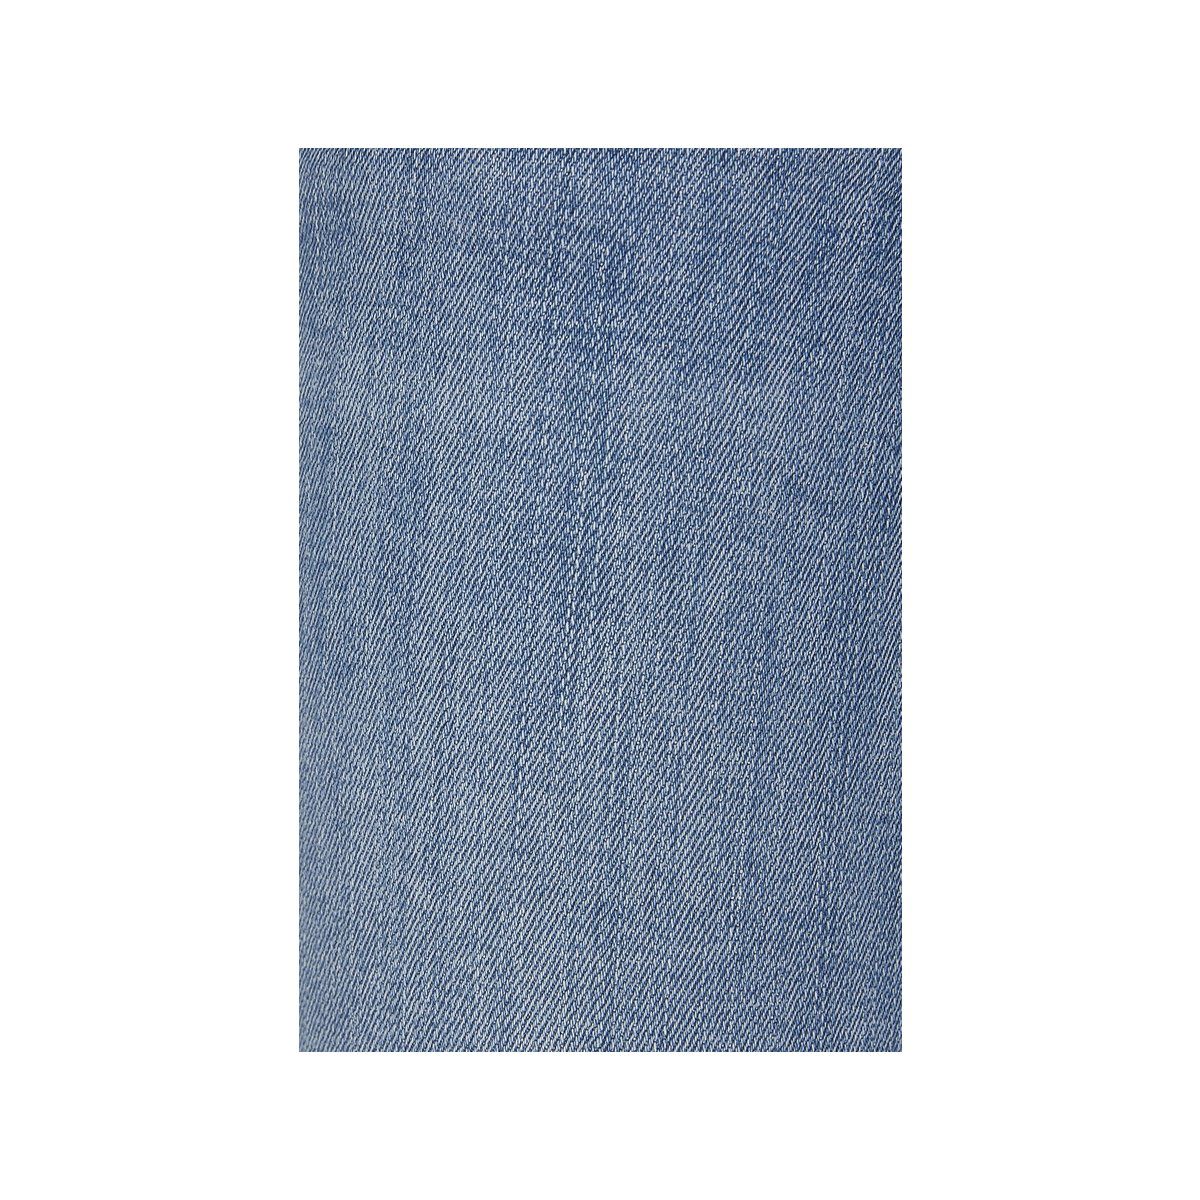 (1-tlg) 5-Pocket-Jeans ANGELS blau